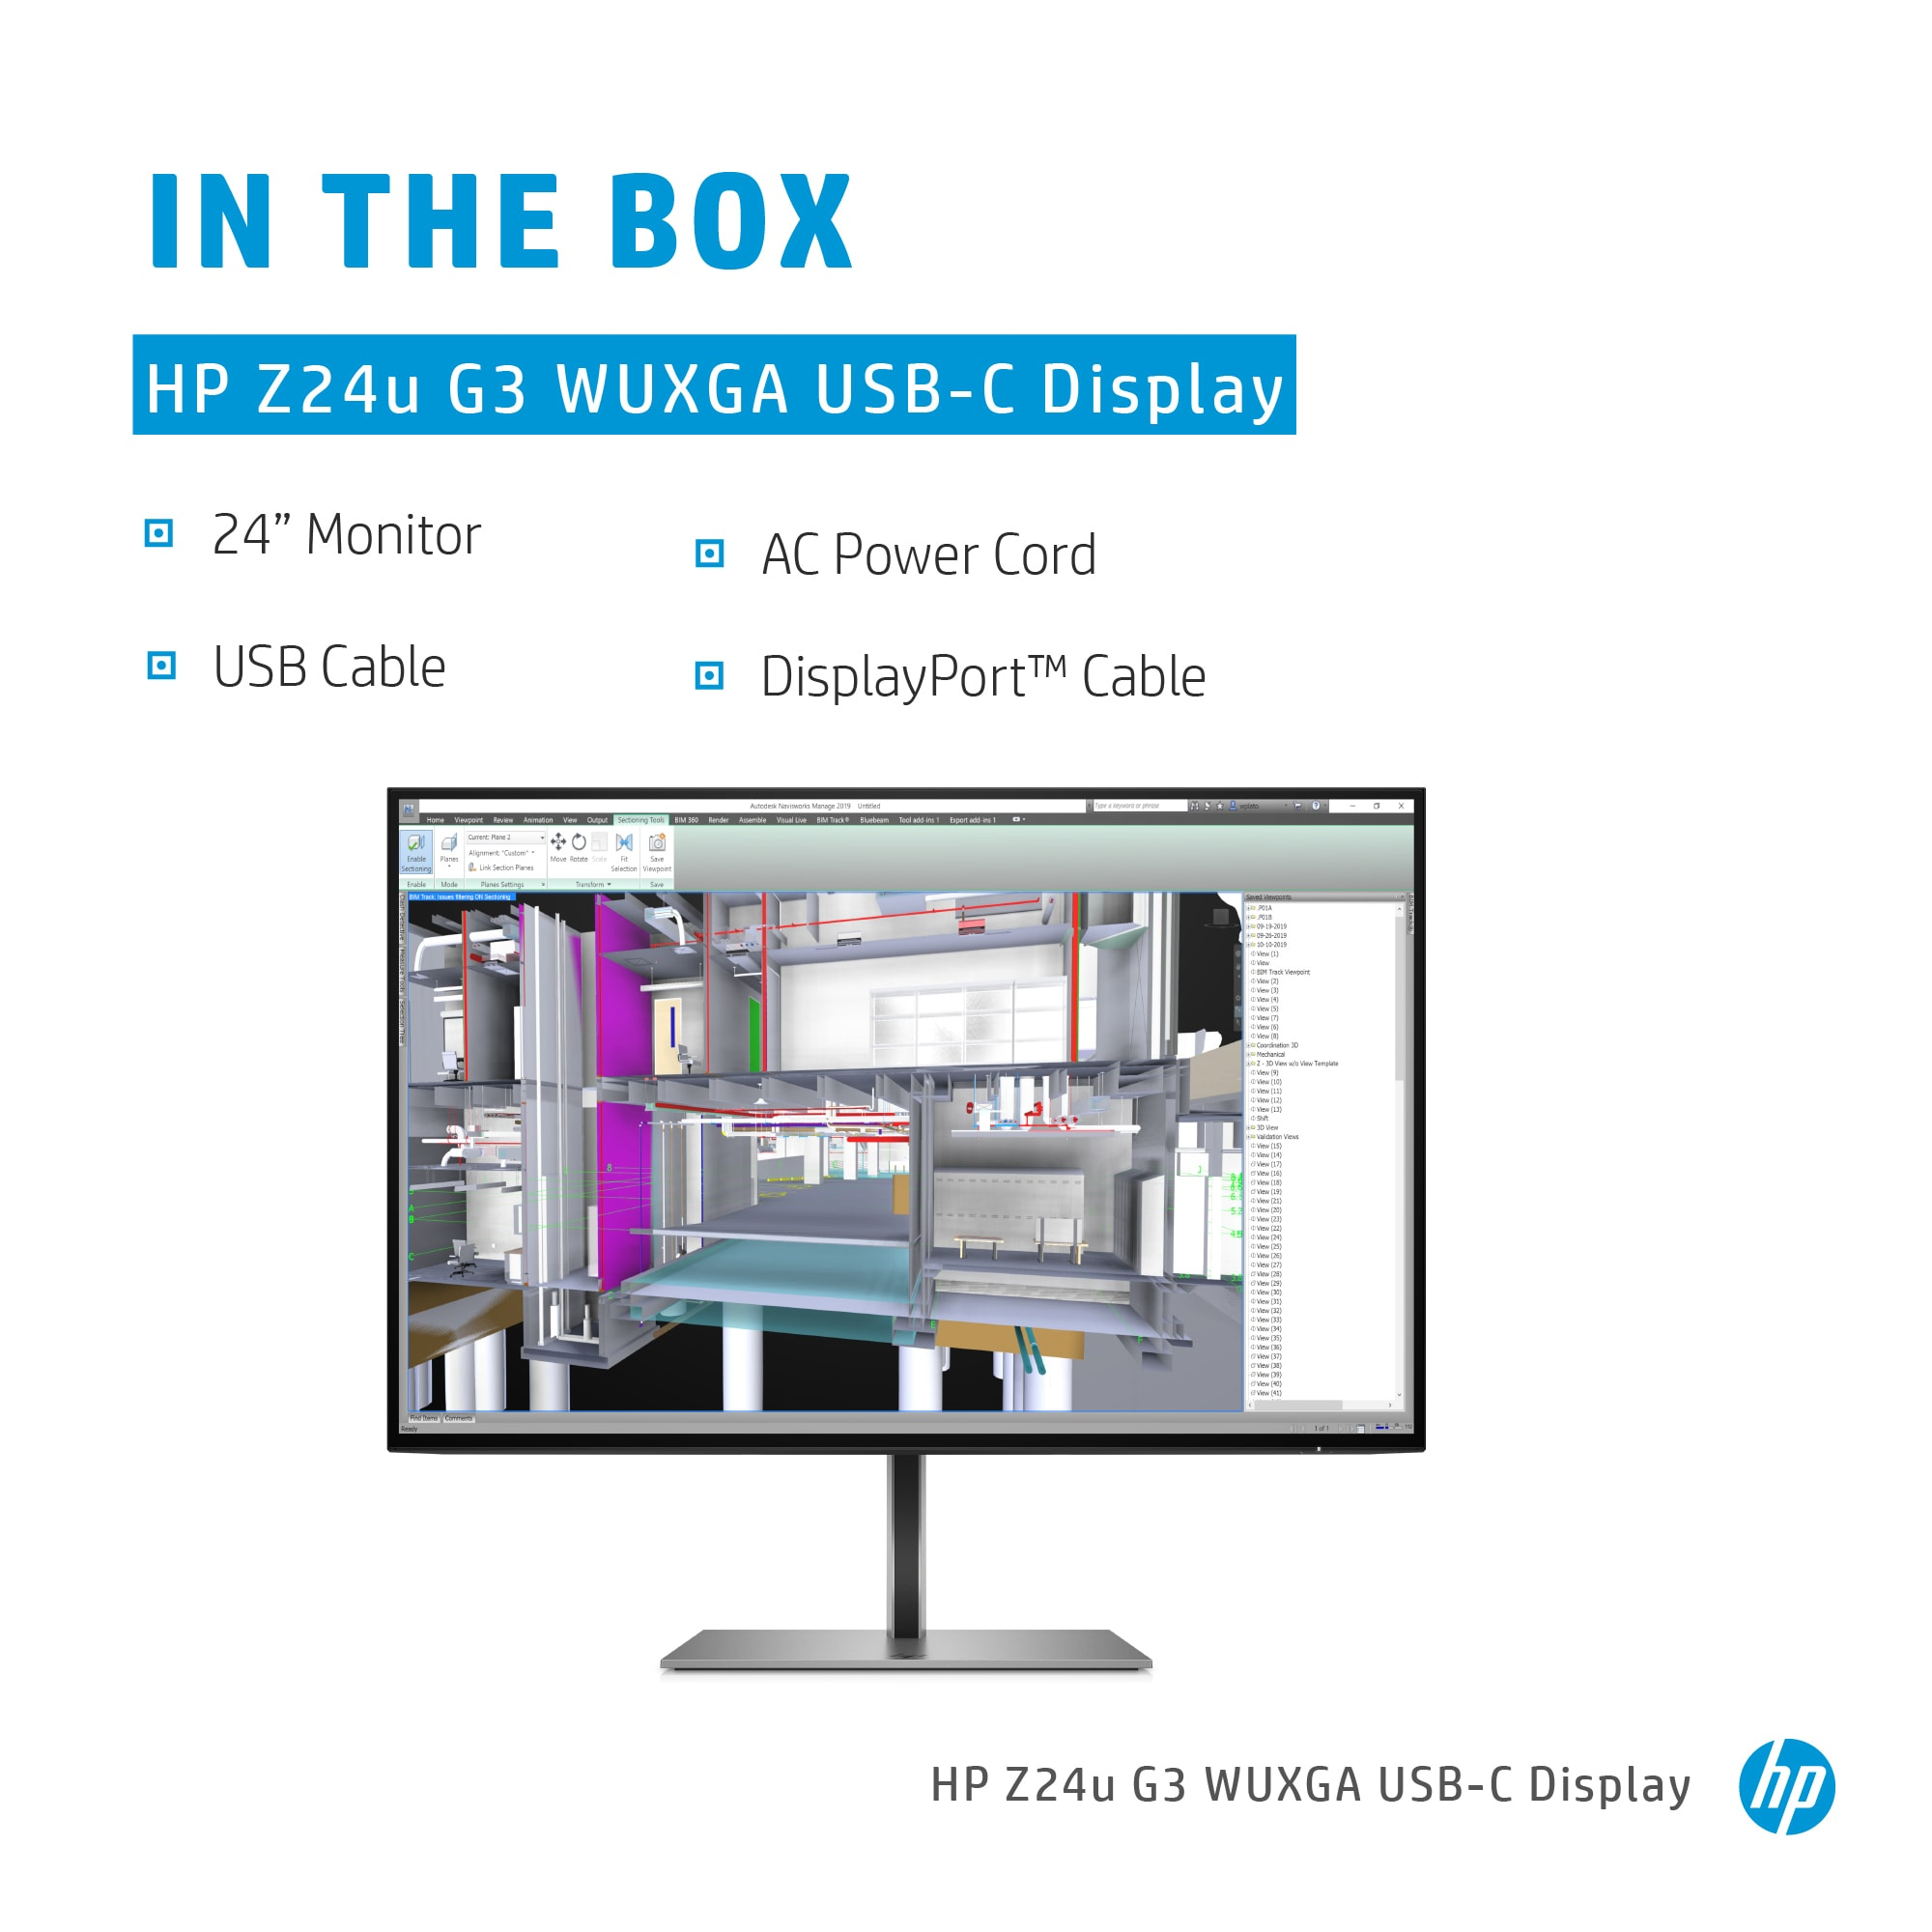 Unbox and Setup of the HP Z27k G3 4K USB-C Monitor, HP Monitors